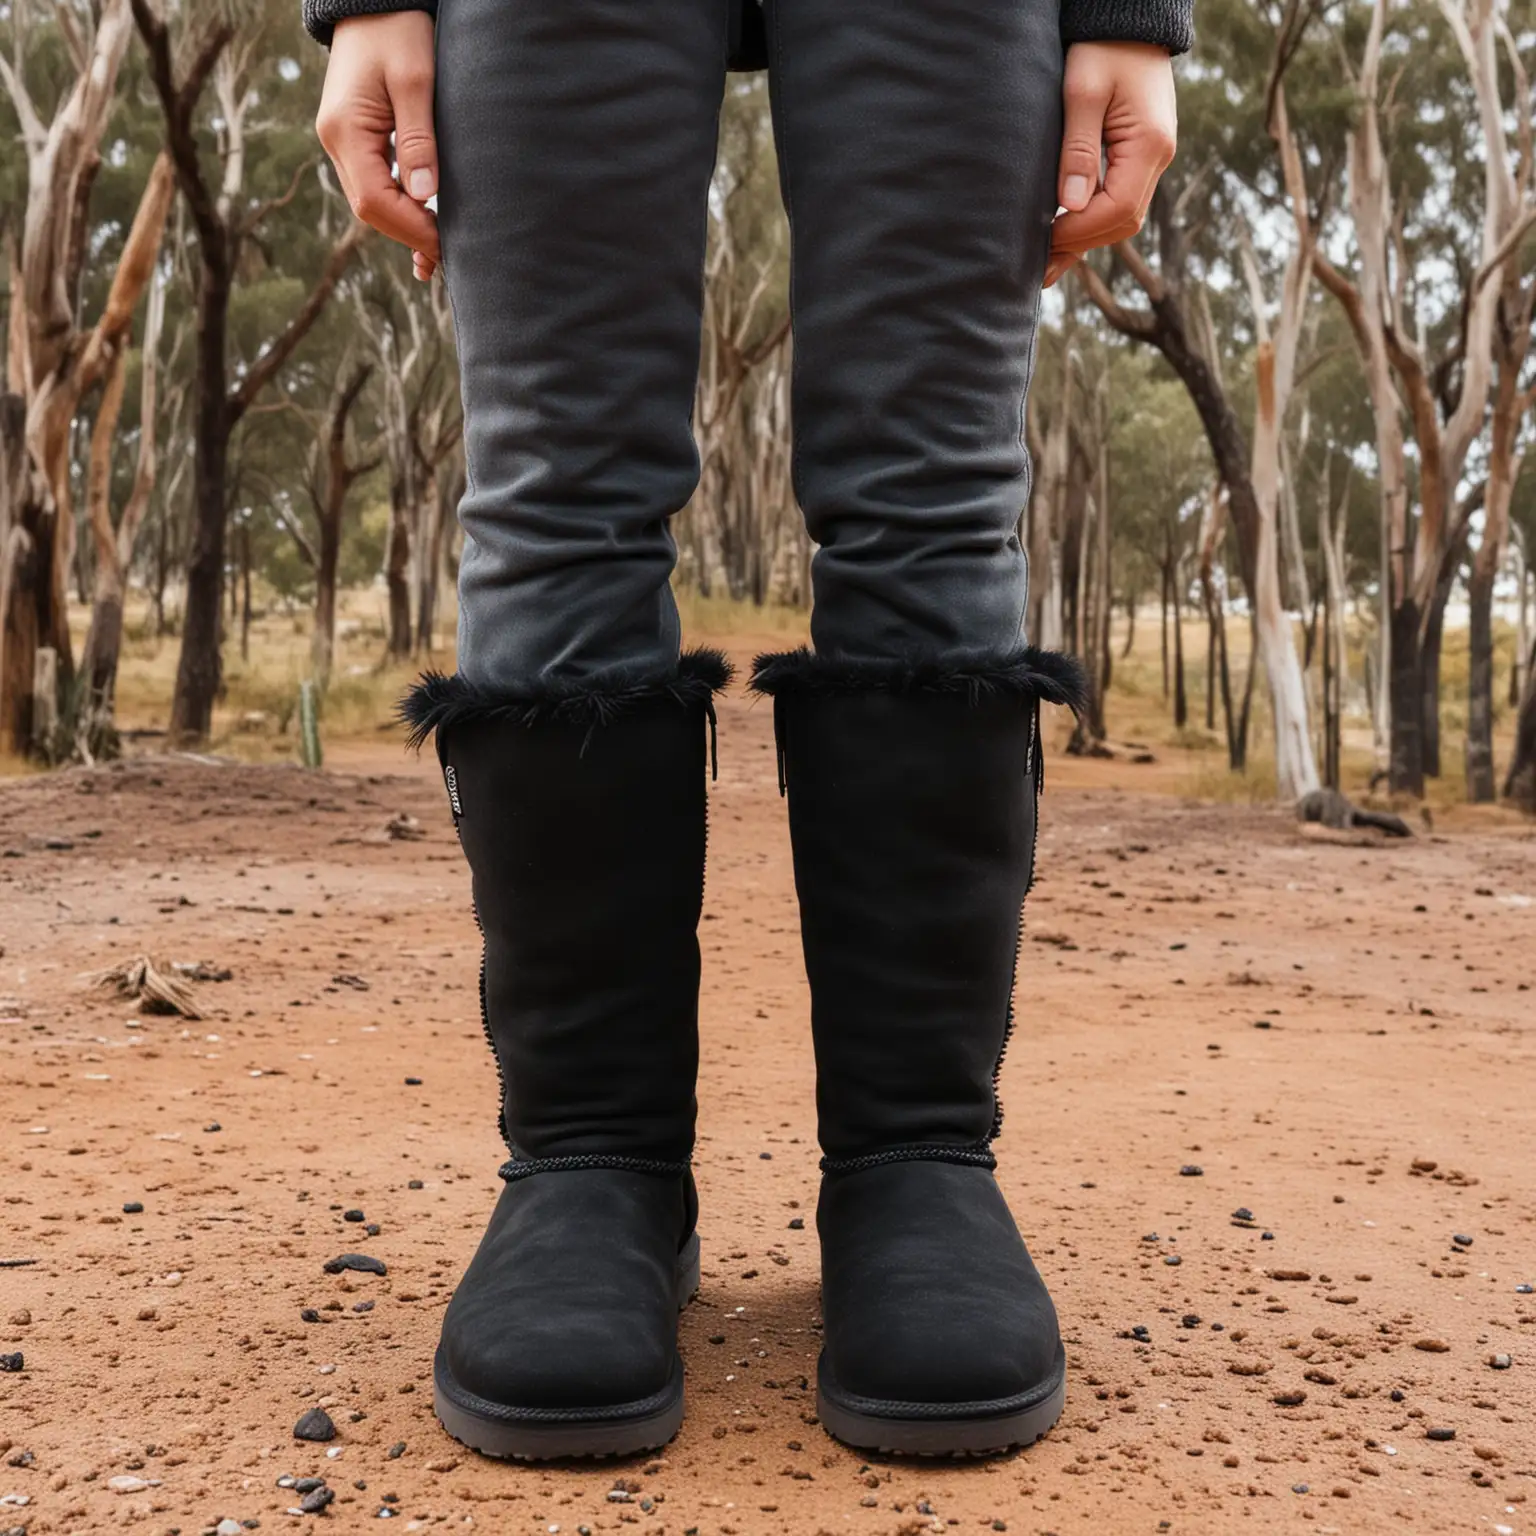 Stylish Individual in Emu Australia Black Ugg Boots